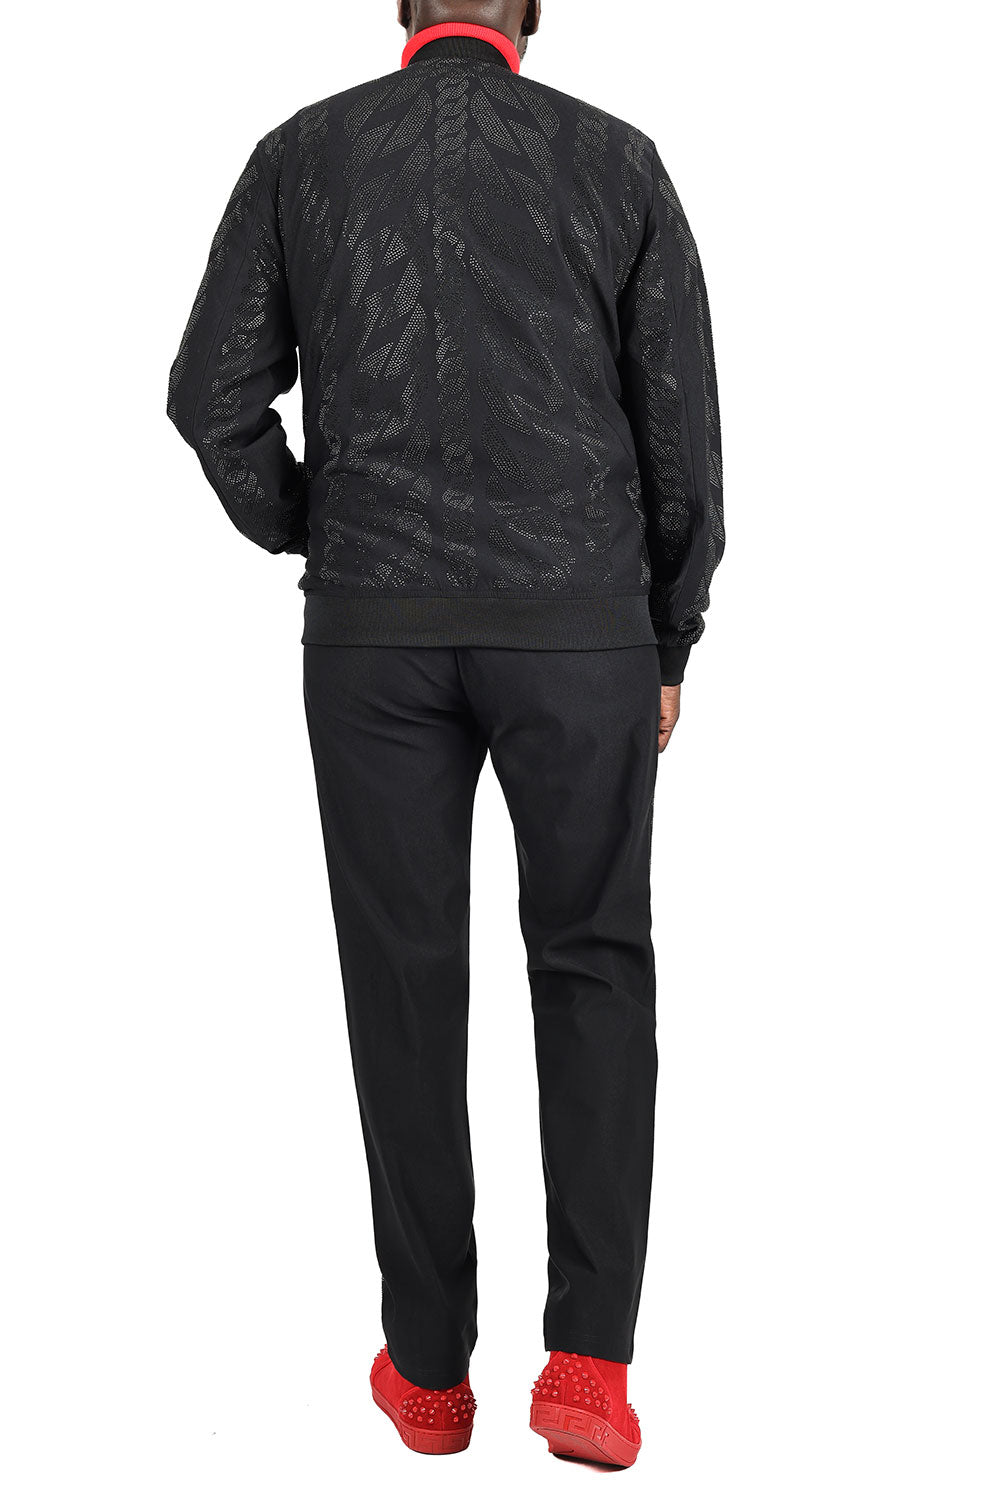 Barabas Men's Chain Rhinestone Pattern Design Luxury Loungewear 2STM13 Black